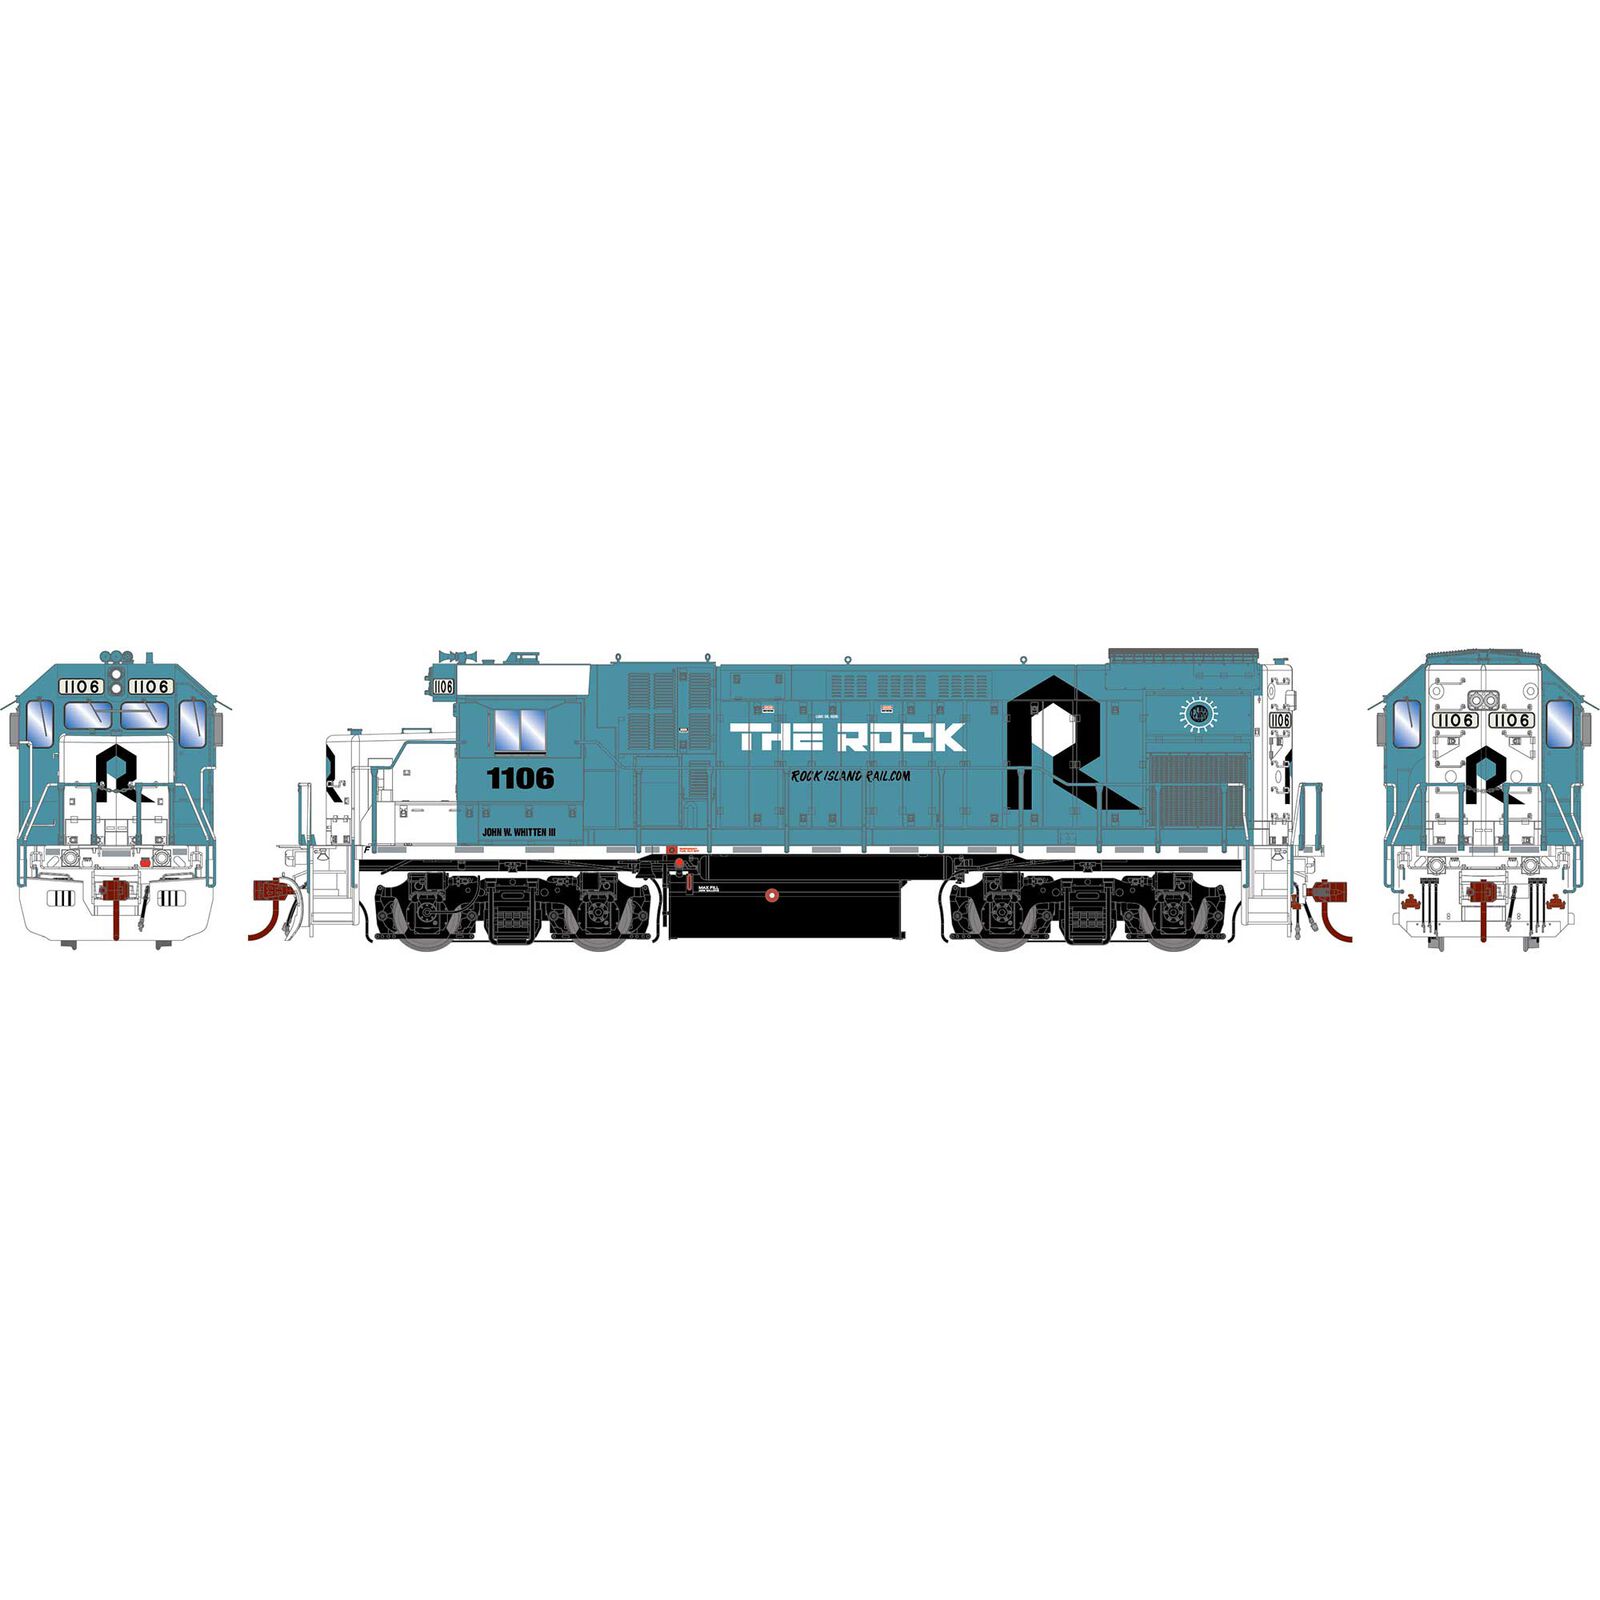 HO GP15-1 Locomotive, Rock Island Rail #1106